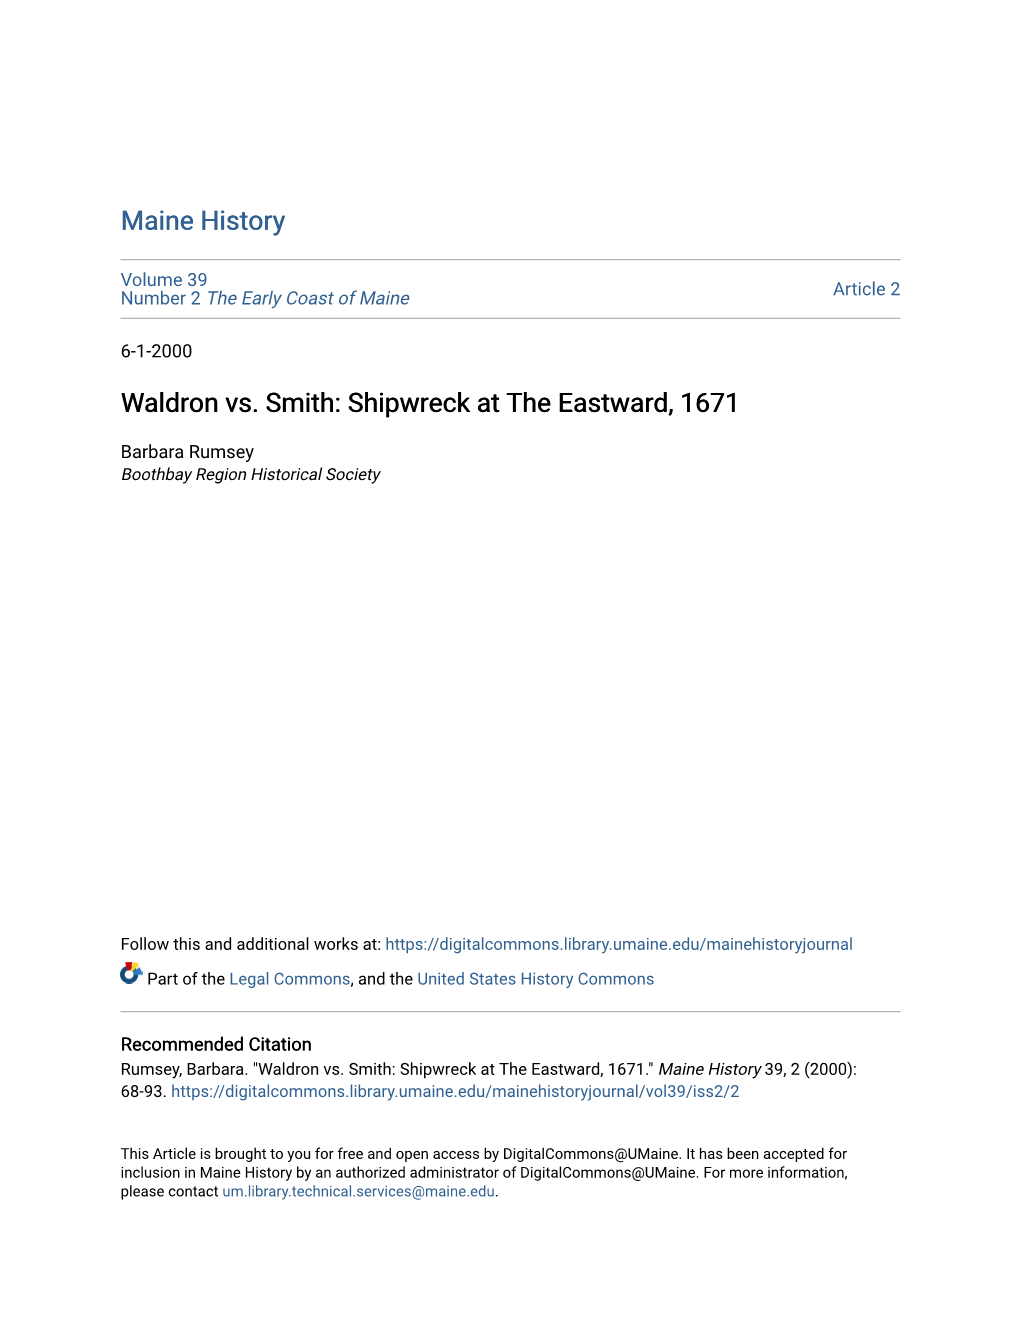 Waldron Vs. Smith: Shipwreck at the Eastward, 1671